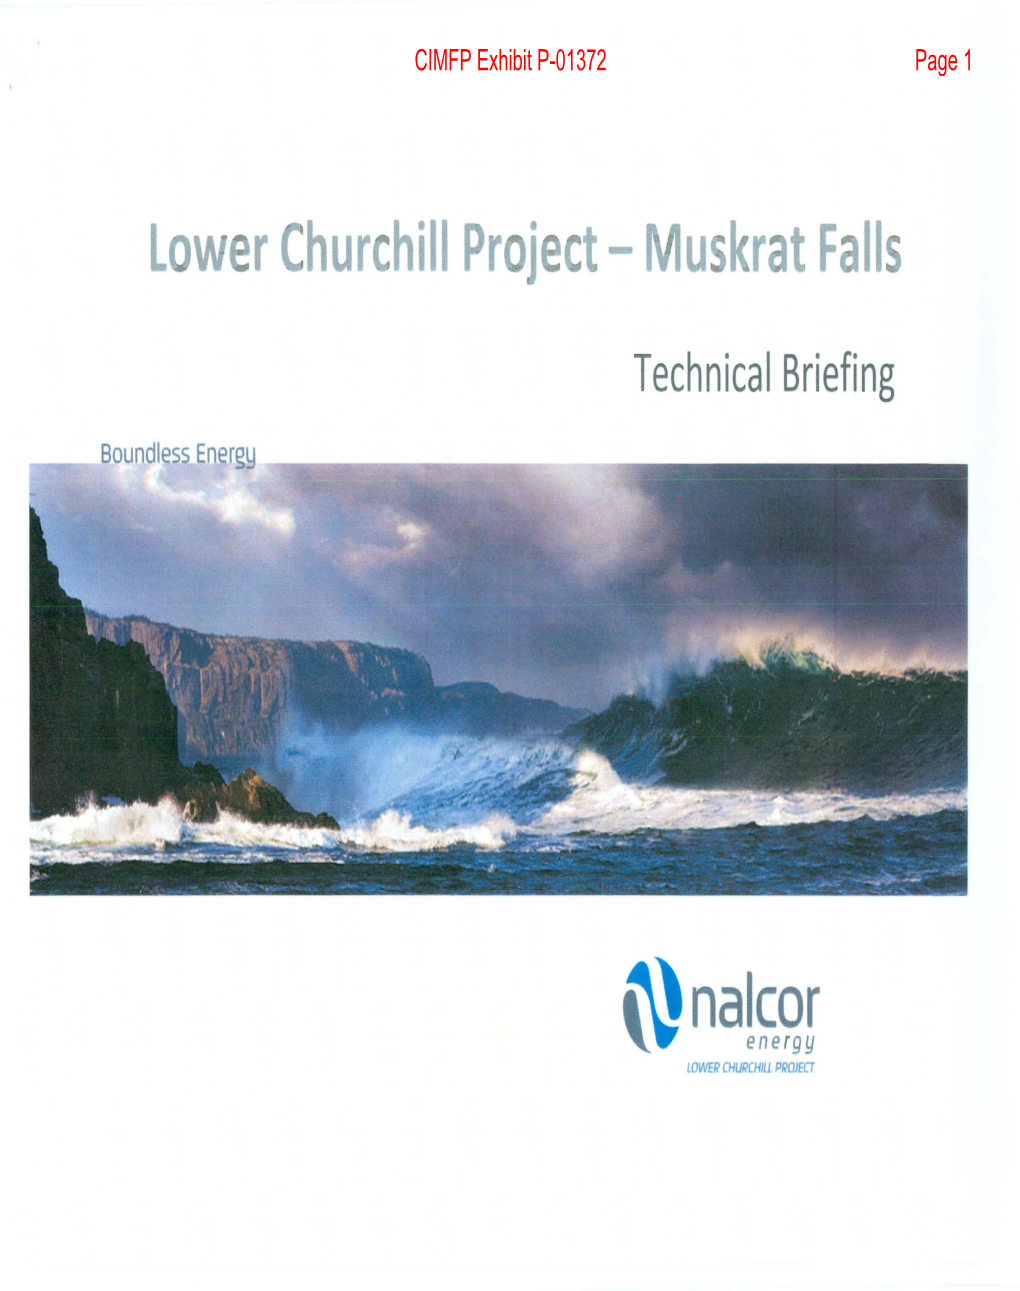 Lower Churchill Project - Muskrat Falls